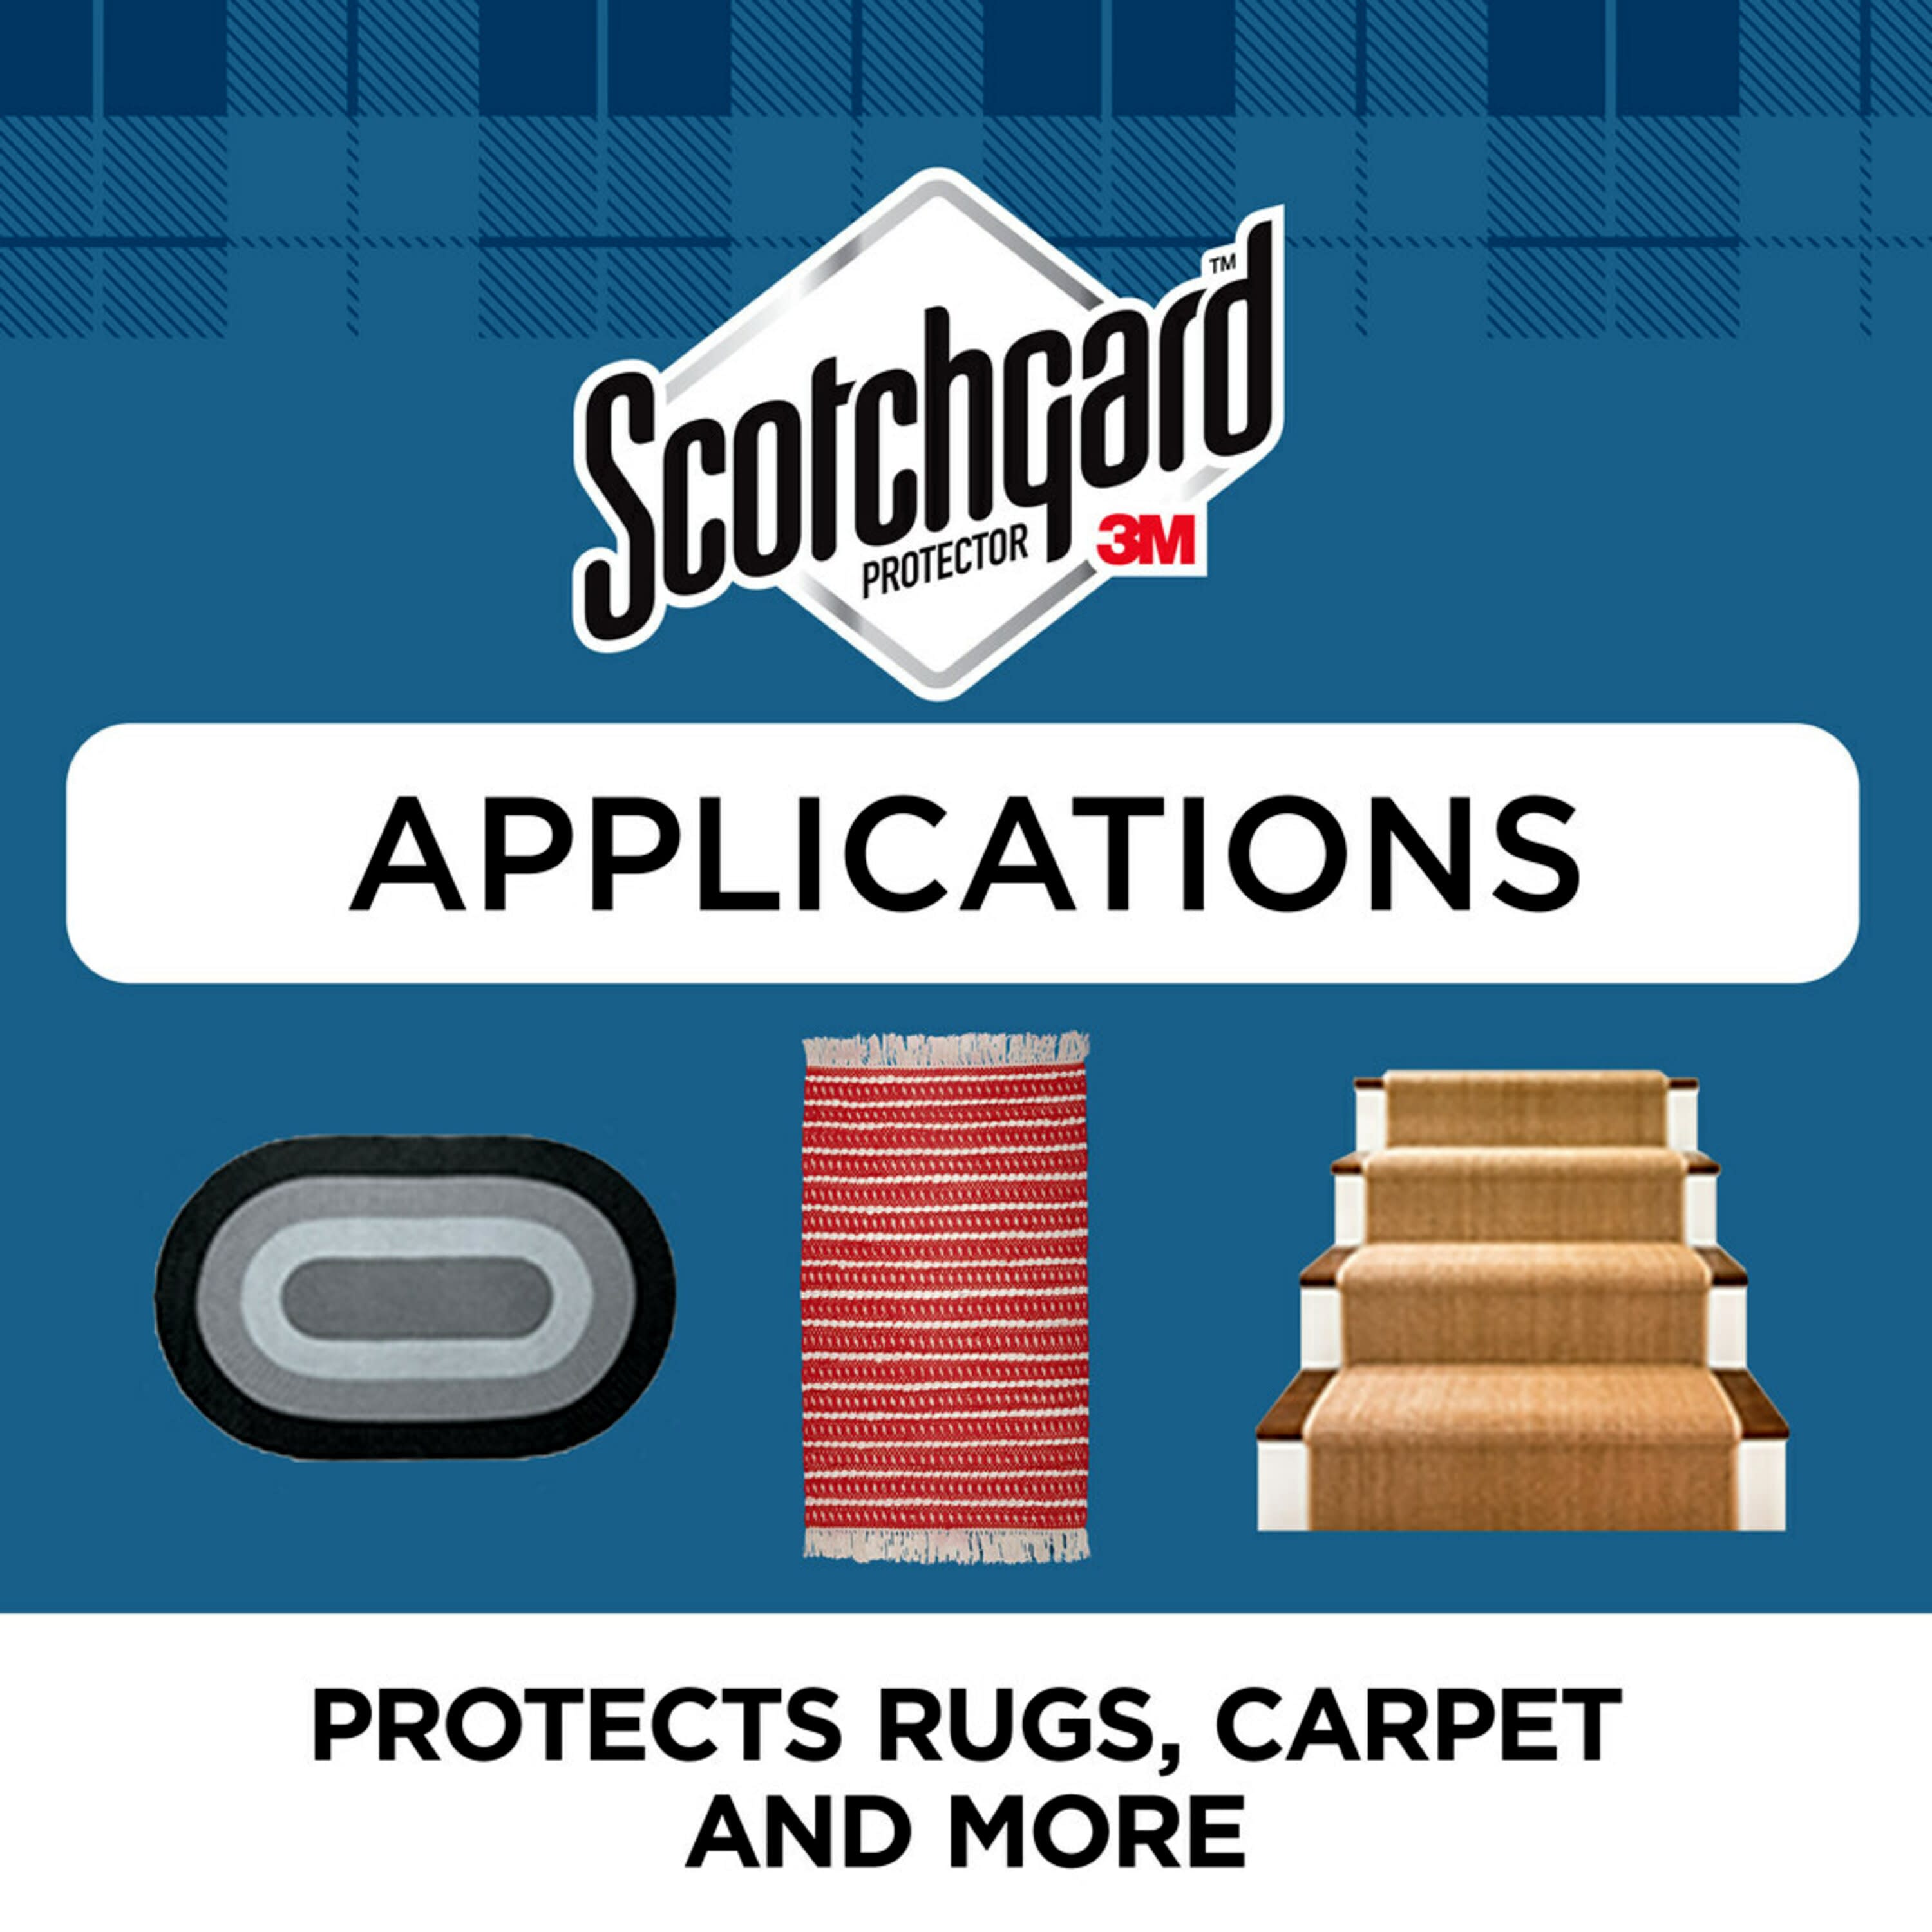 Scotchgard Professional Carpet Protector